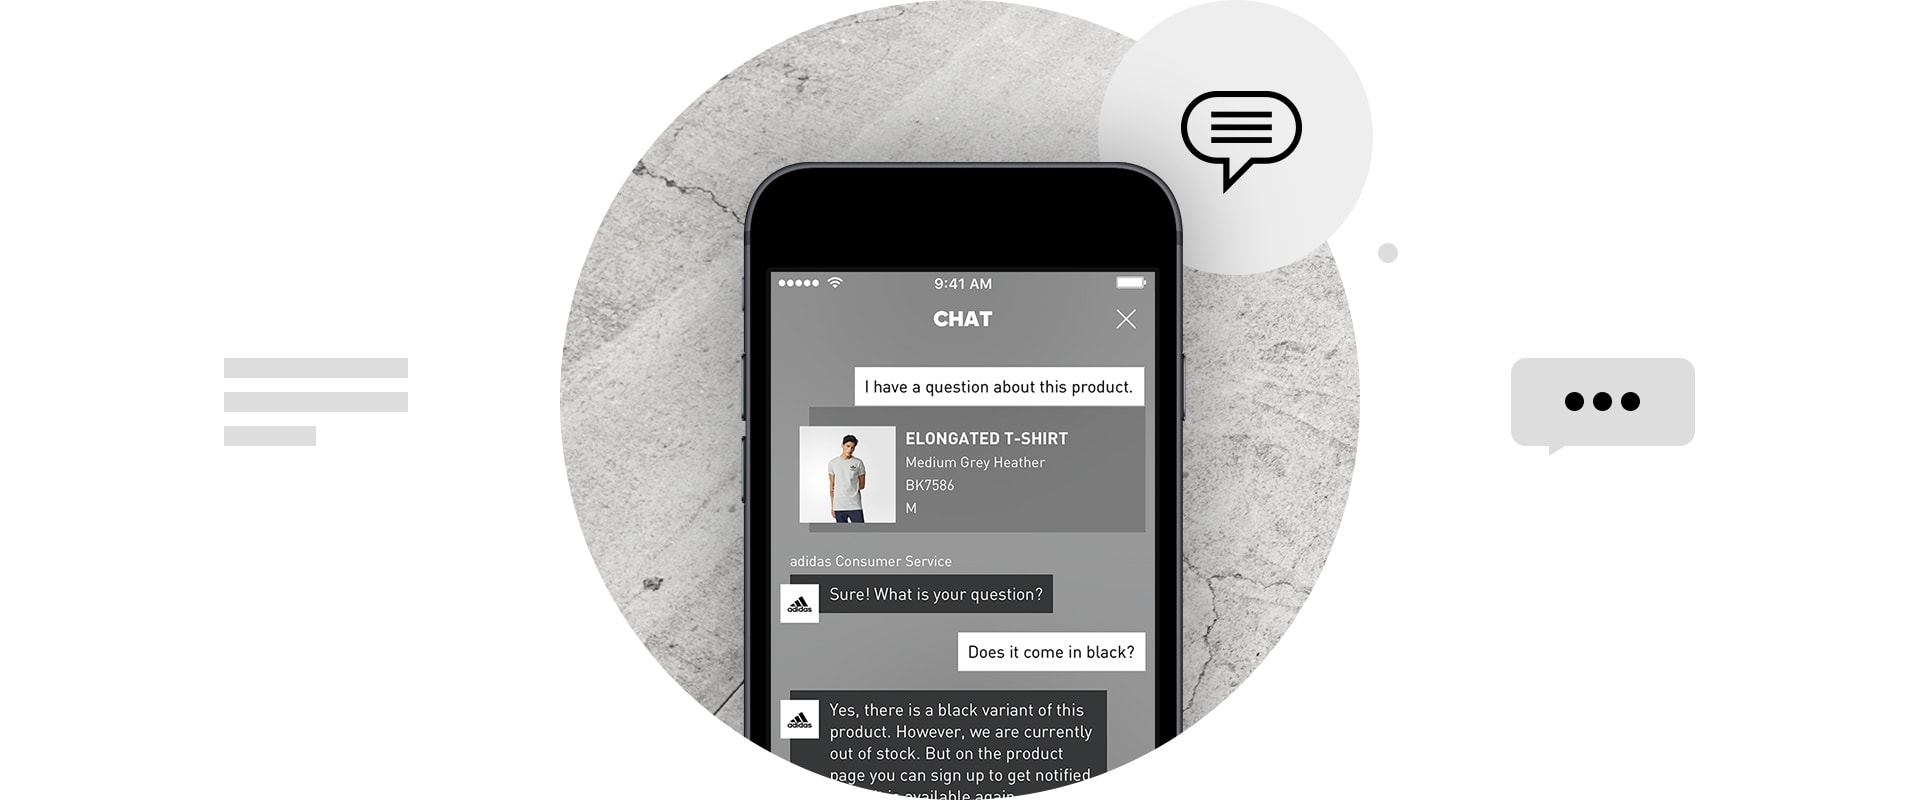 لبديل ستوب احتمالات adidas online chat 